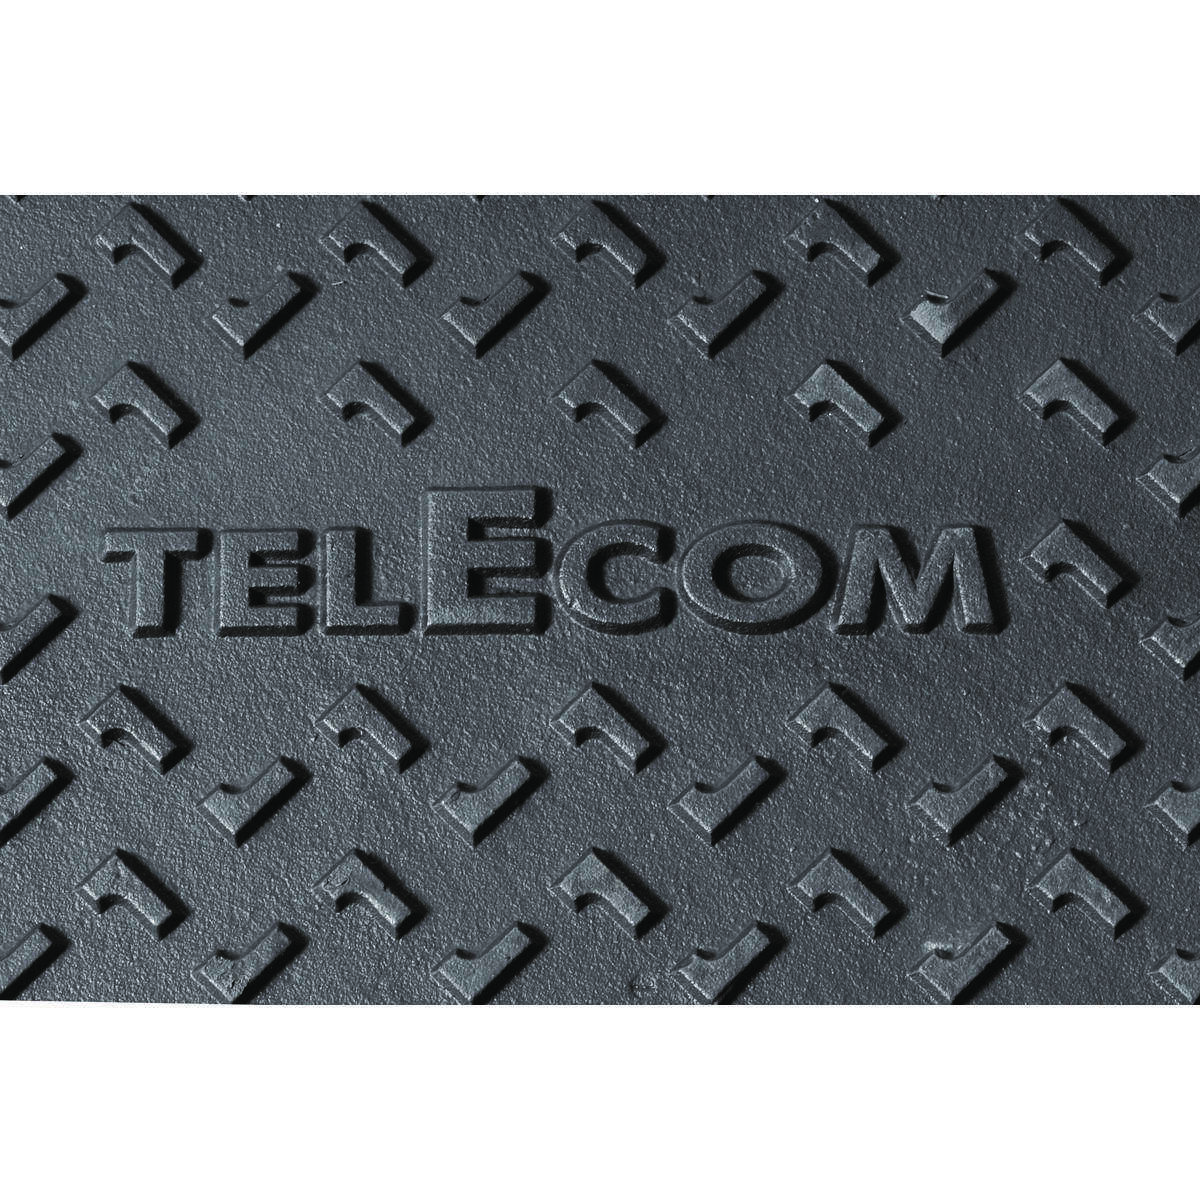 Cadre en acier galvanisé avec tampon en fonte et logo Telecom